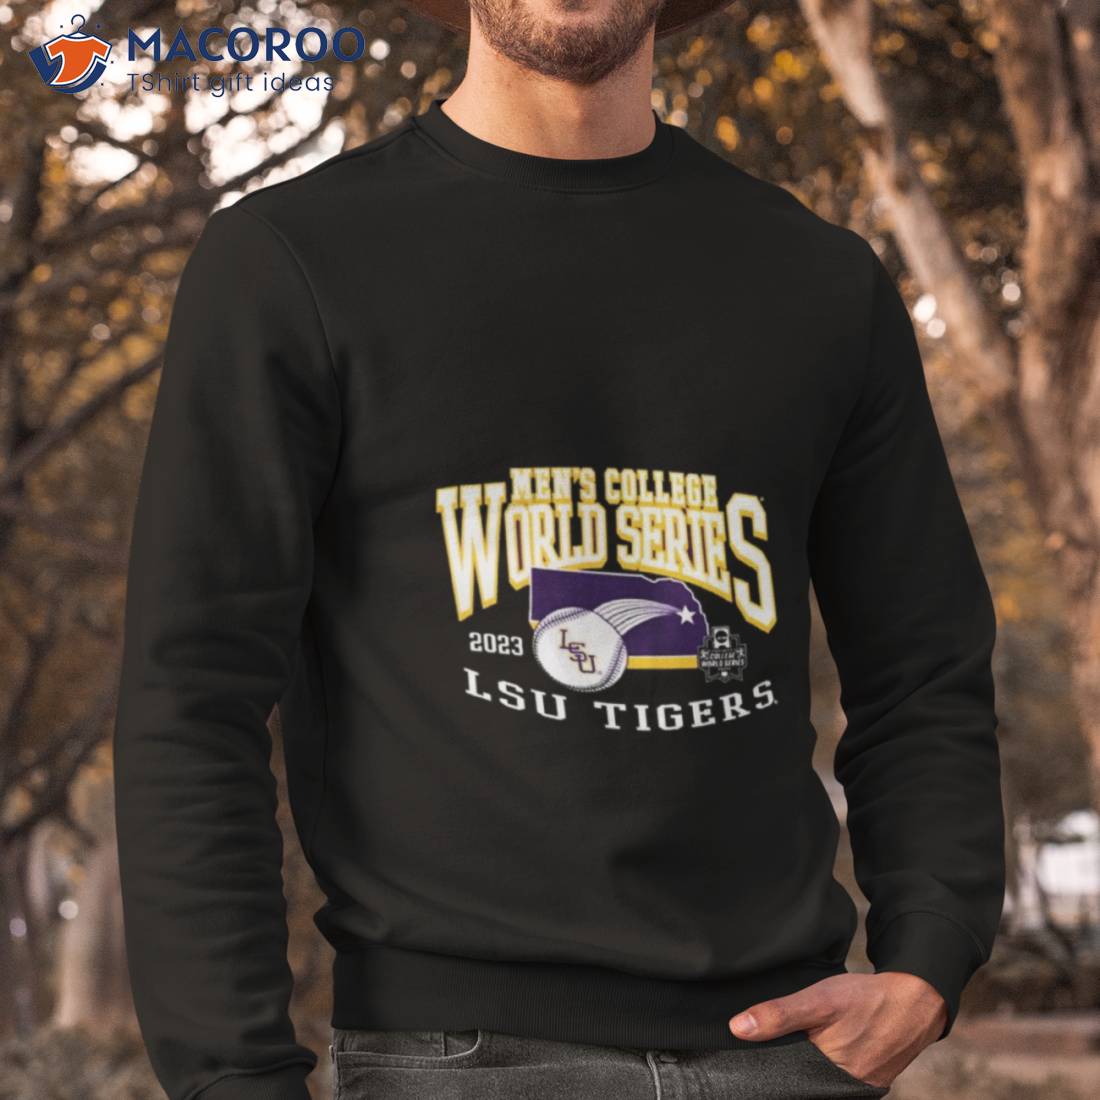 Lsu Tigers 2023 Men's College World Series Baseball Shirt